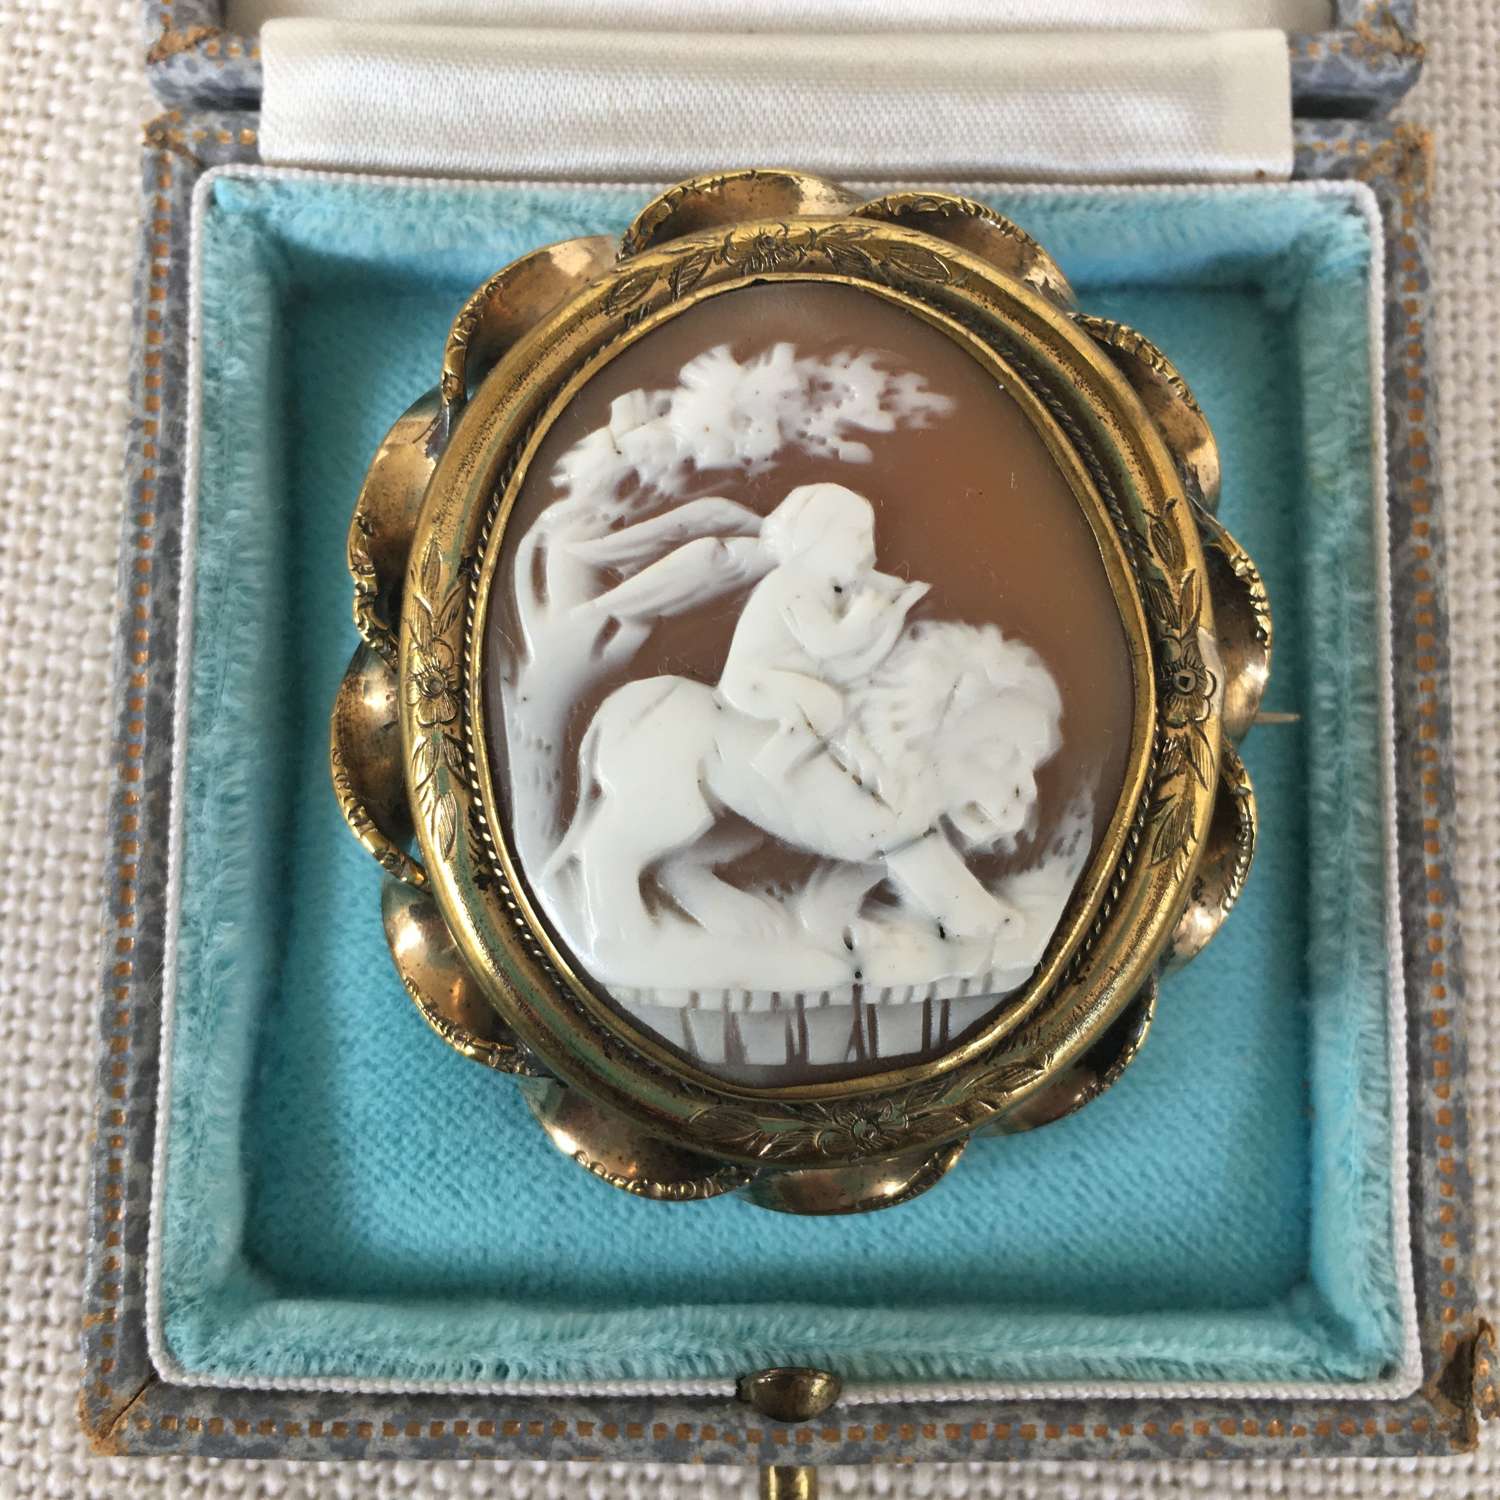 Shell cameo brooch of cherub sitting on lion c 1880